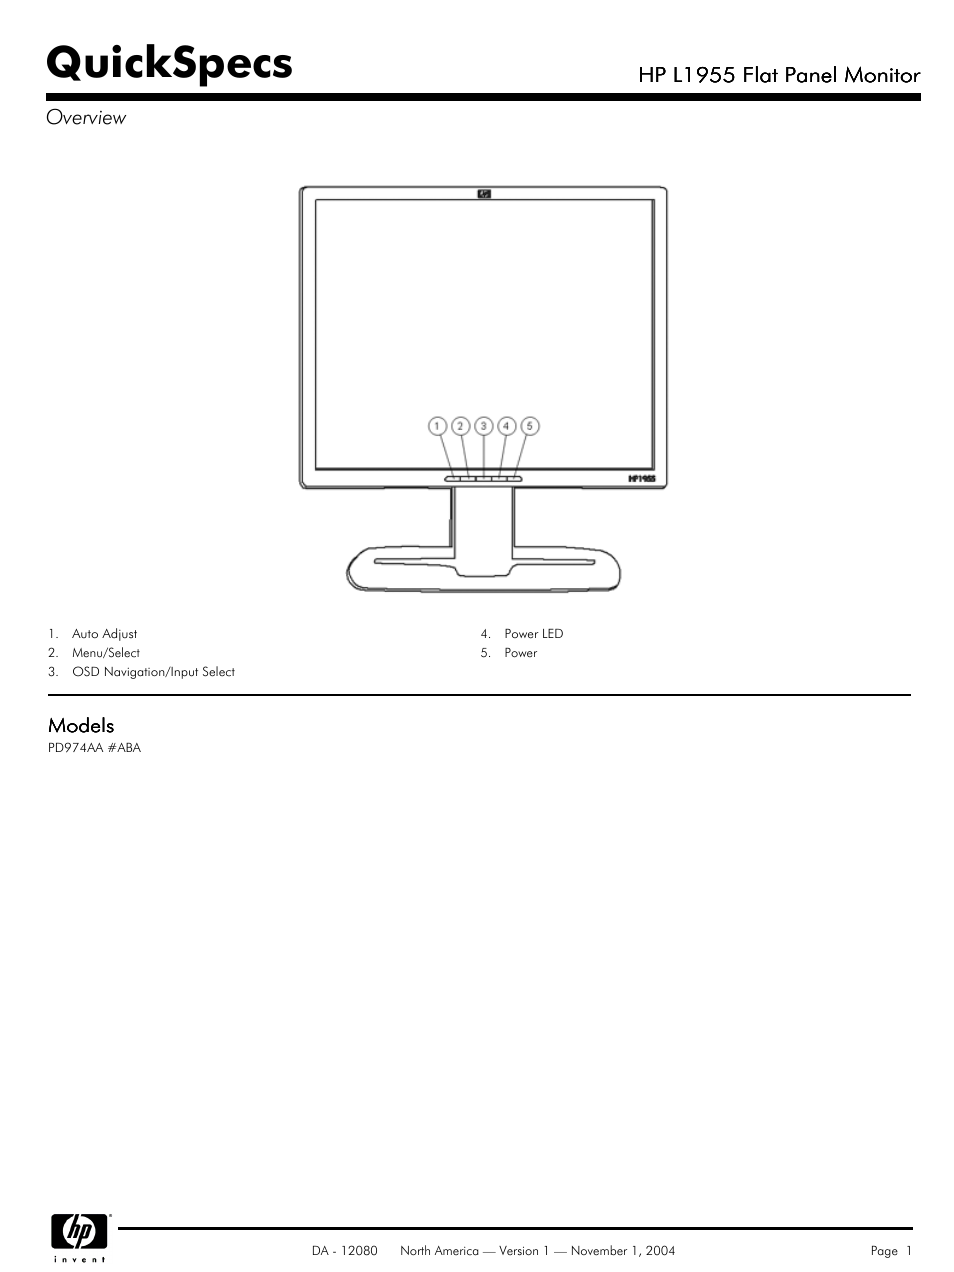 Compaq HP L1955 User Manual | 4 pages